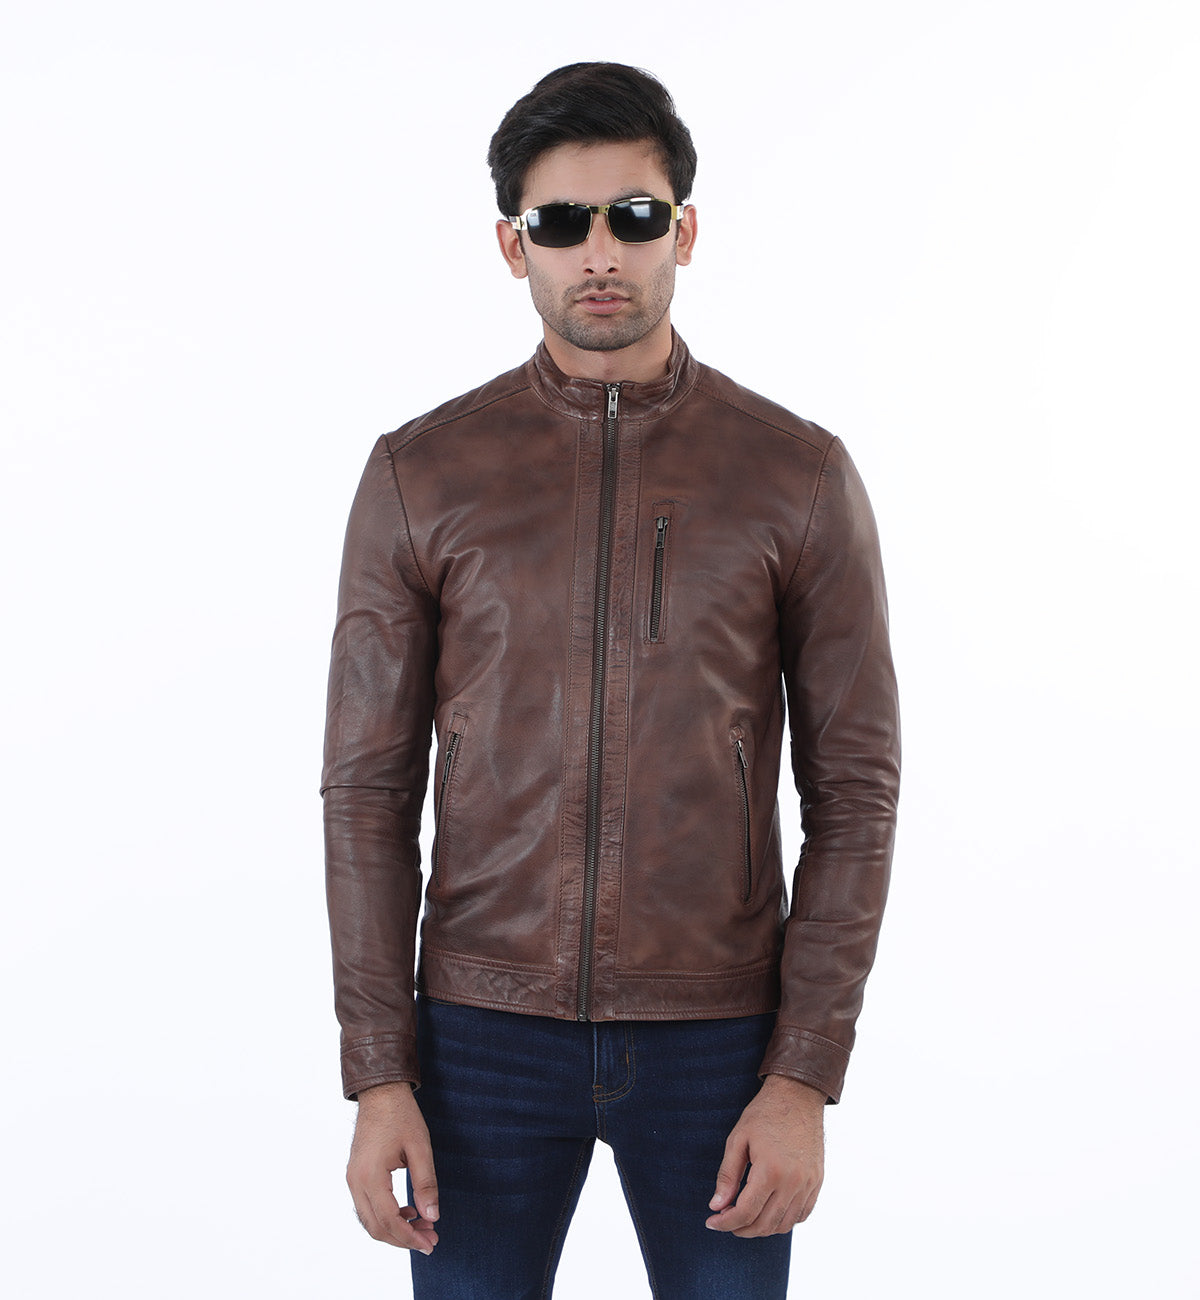 Racer Jacket Brown (Genuine Leather)